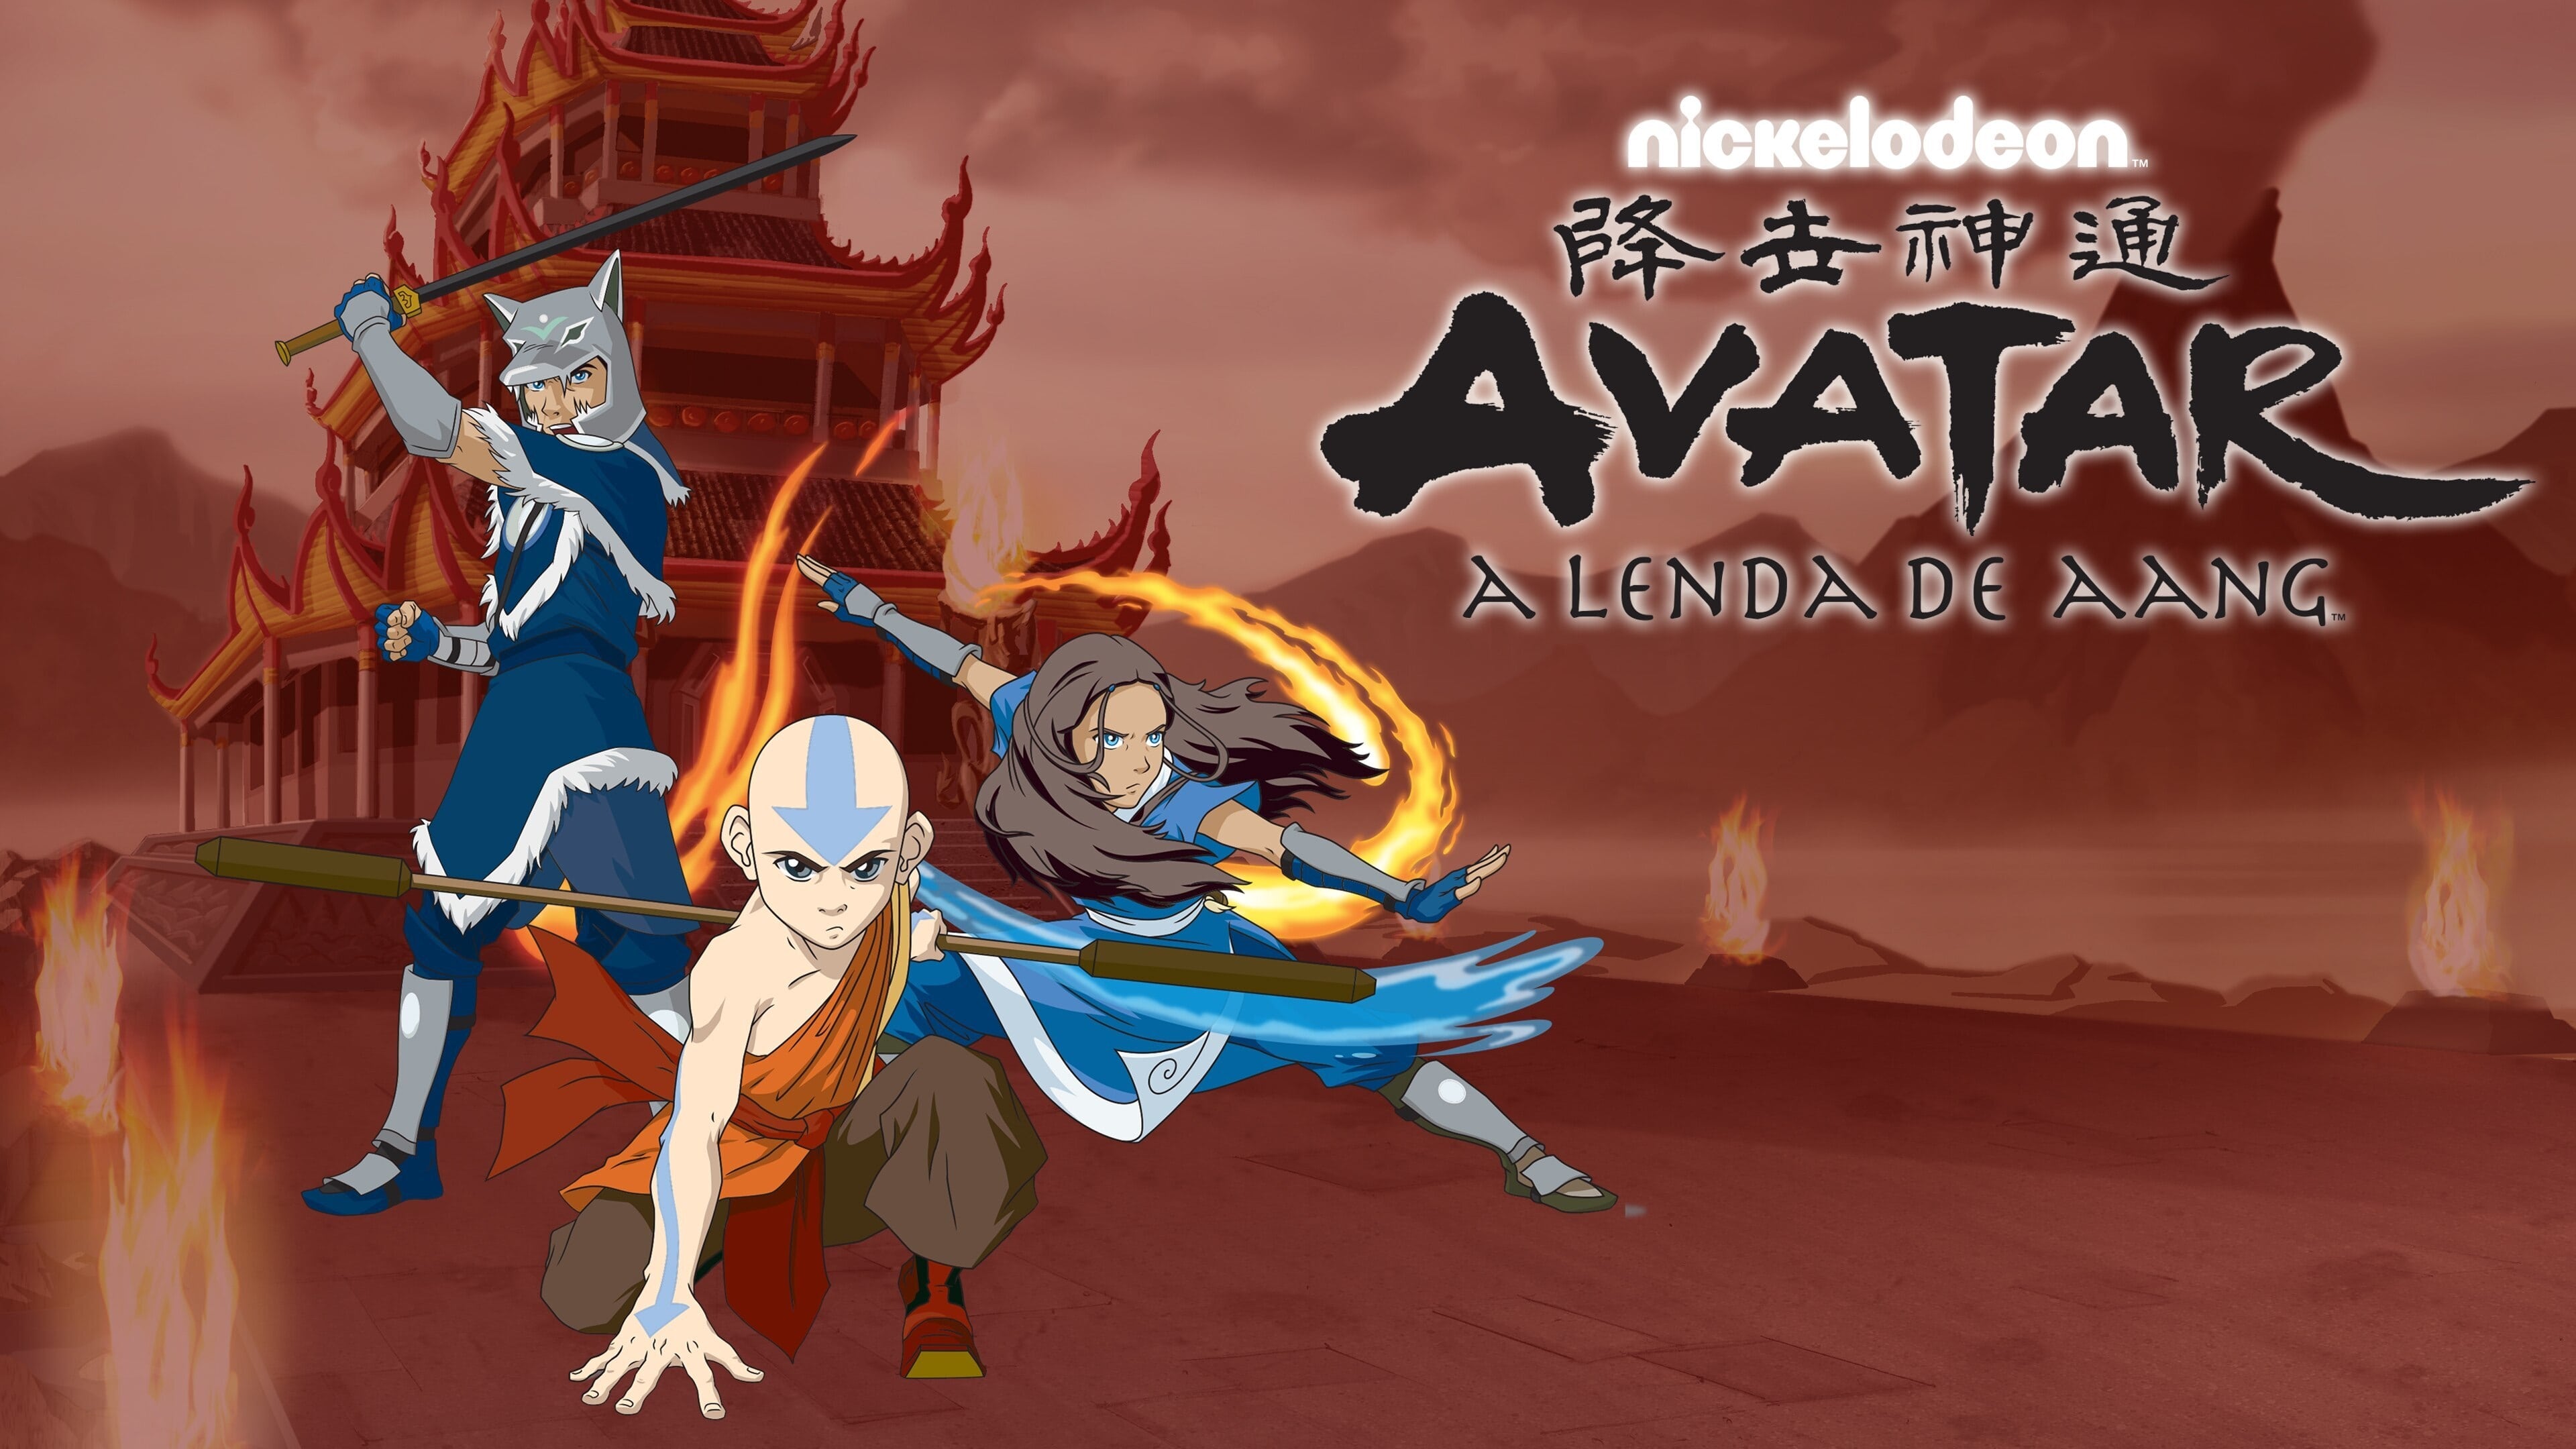 Avatar: La leyenda de Aang